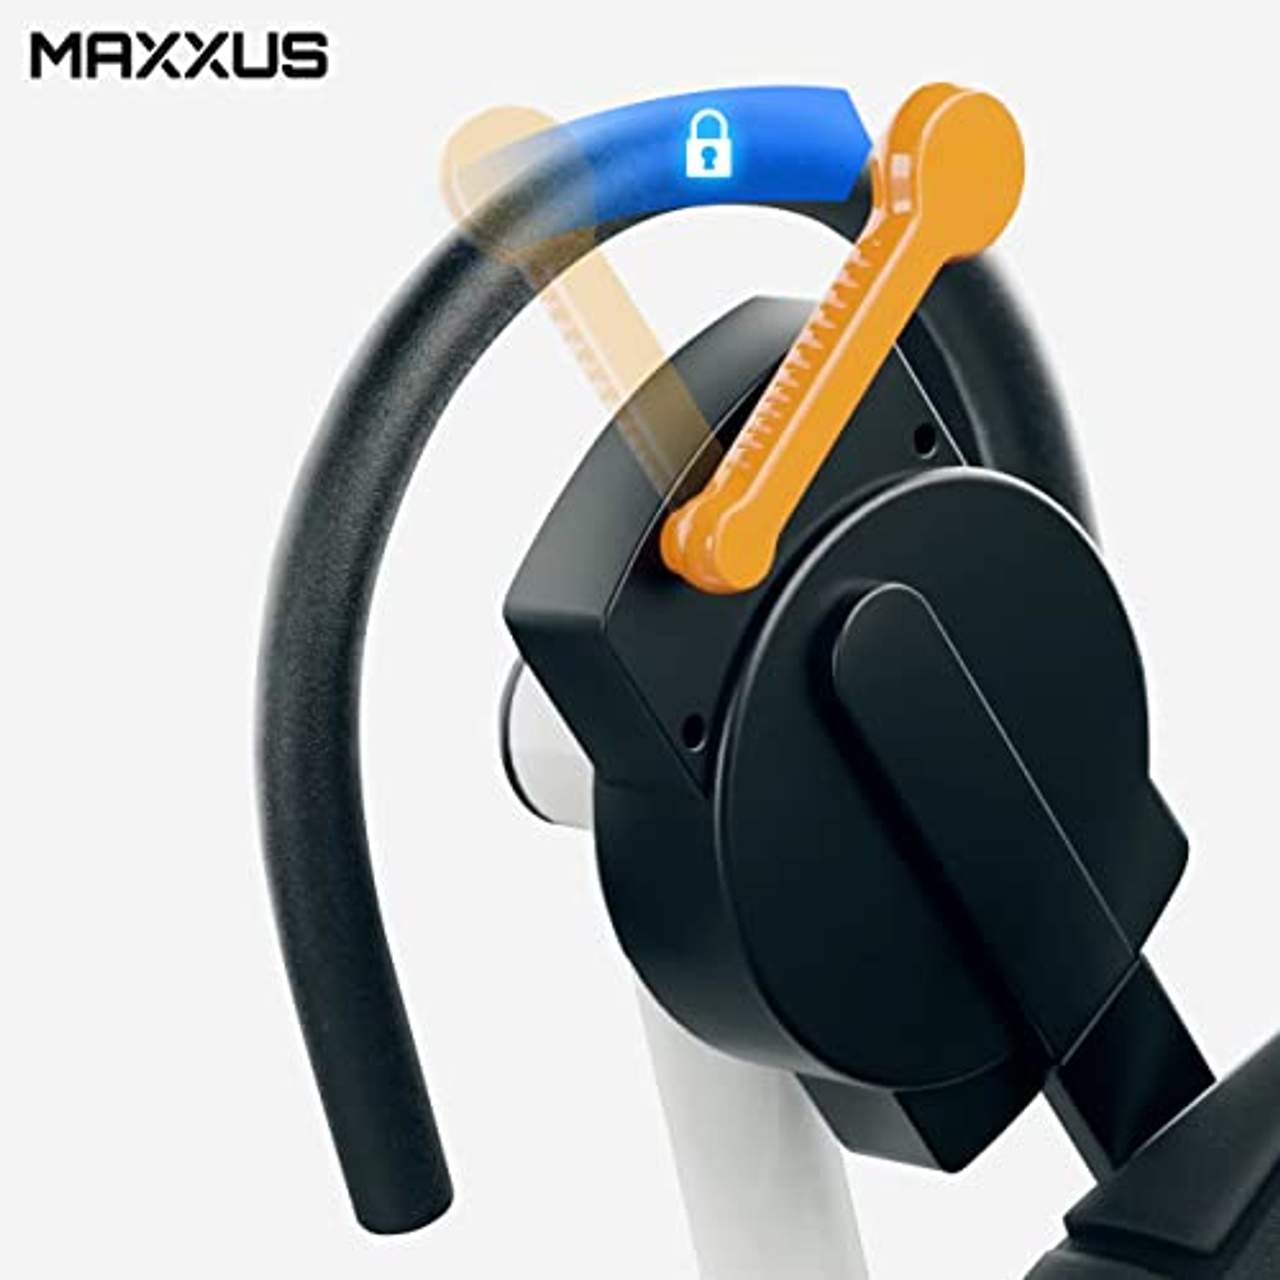 MAXXUS Gravity Pro 2